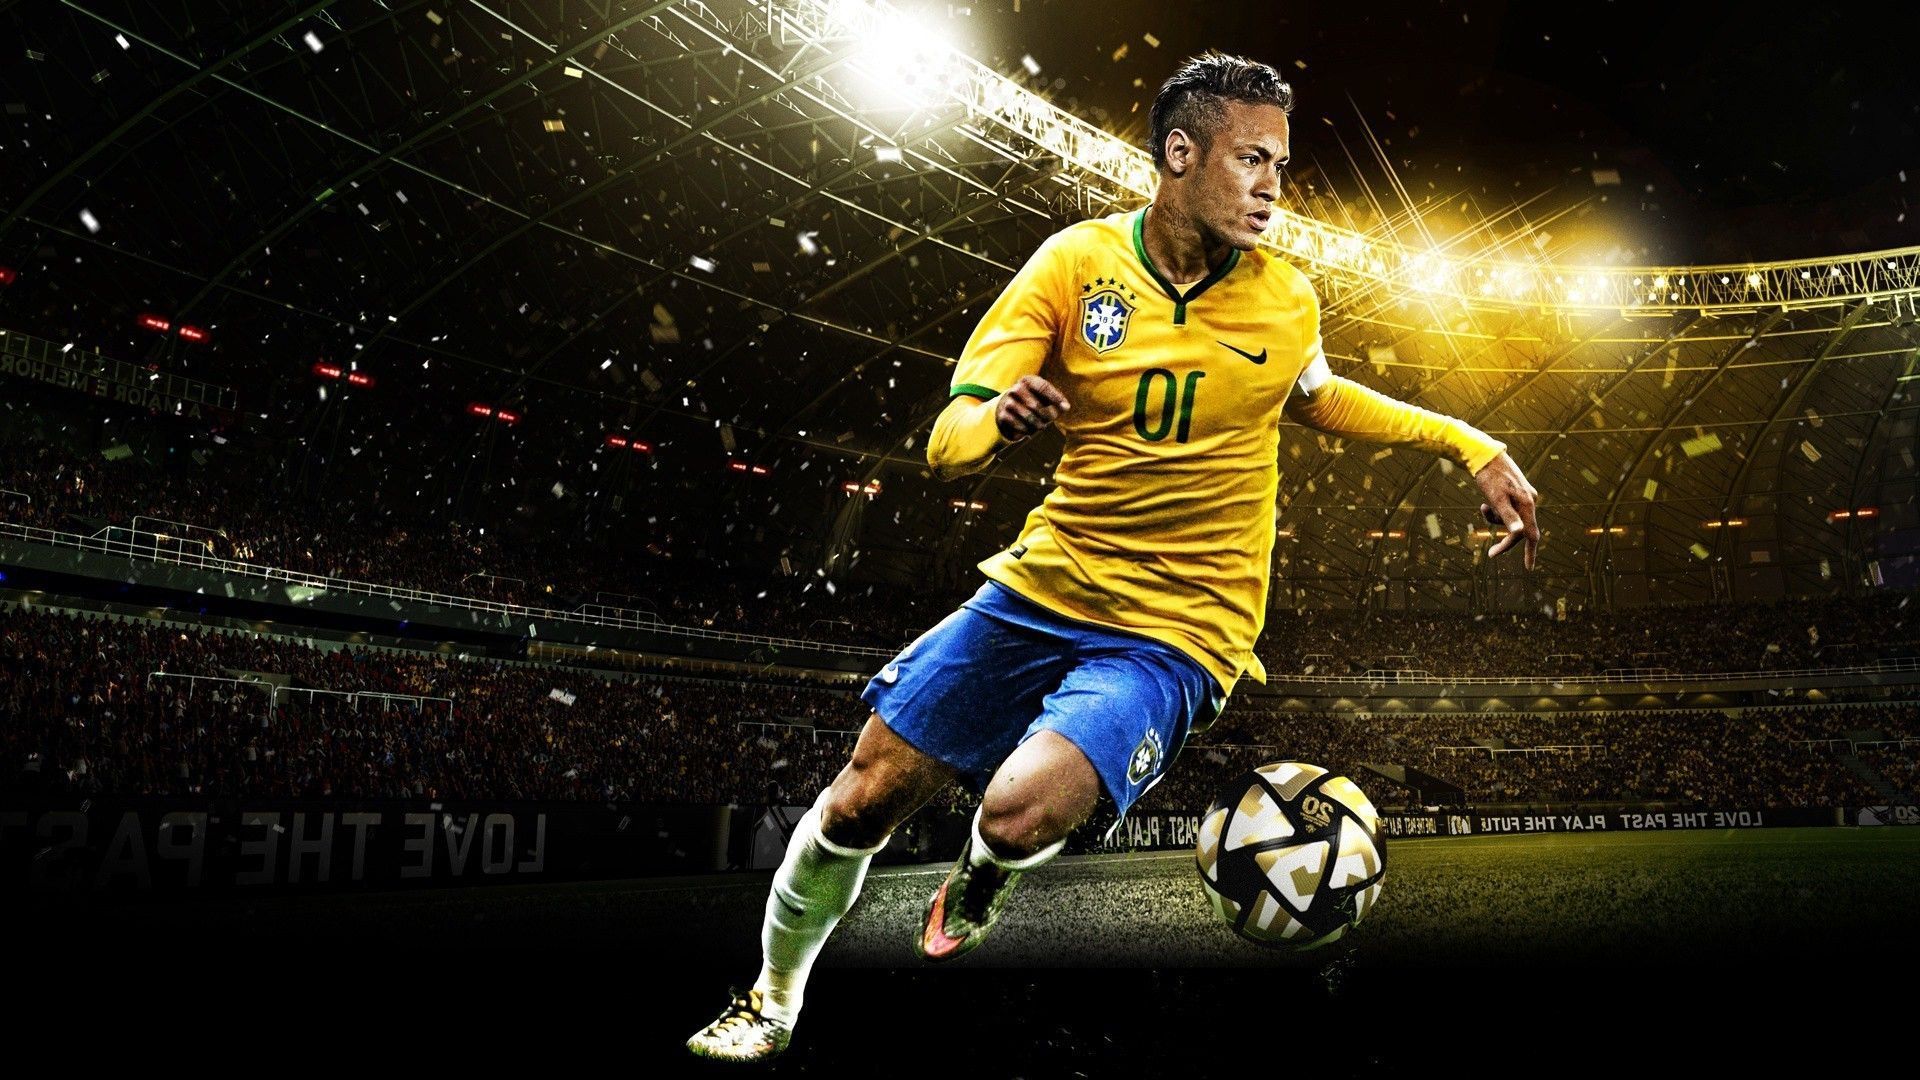 Neymar Wallpapers - Mejores fondos de pantalla de Neymar gratis - WallpaperAccess